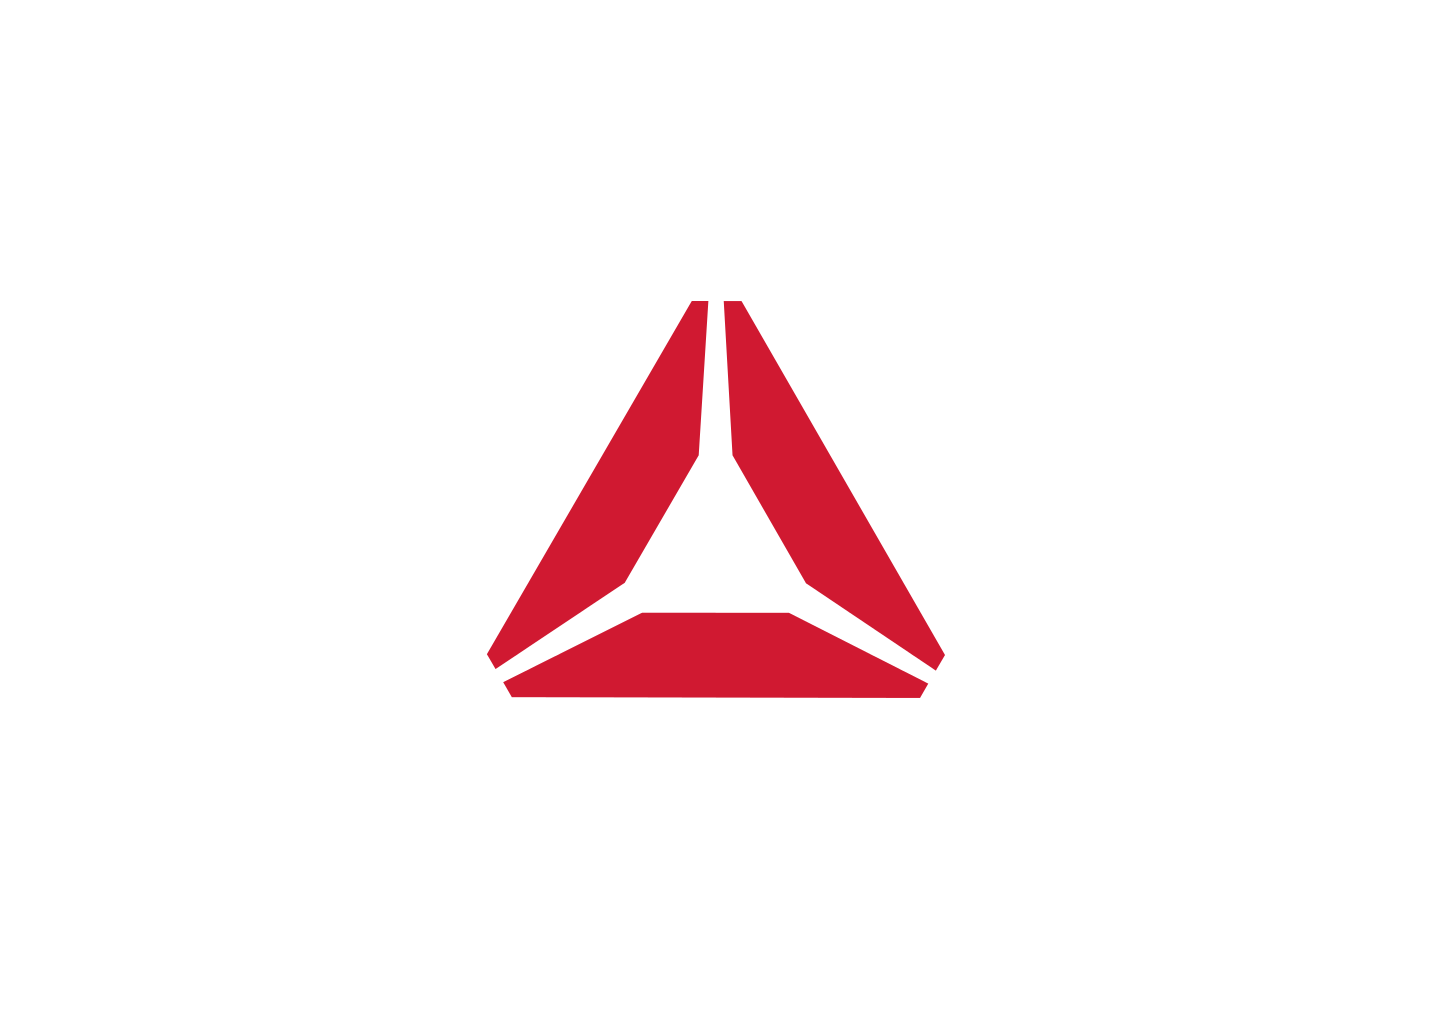 4 Red Triangles Logo - LogoDix